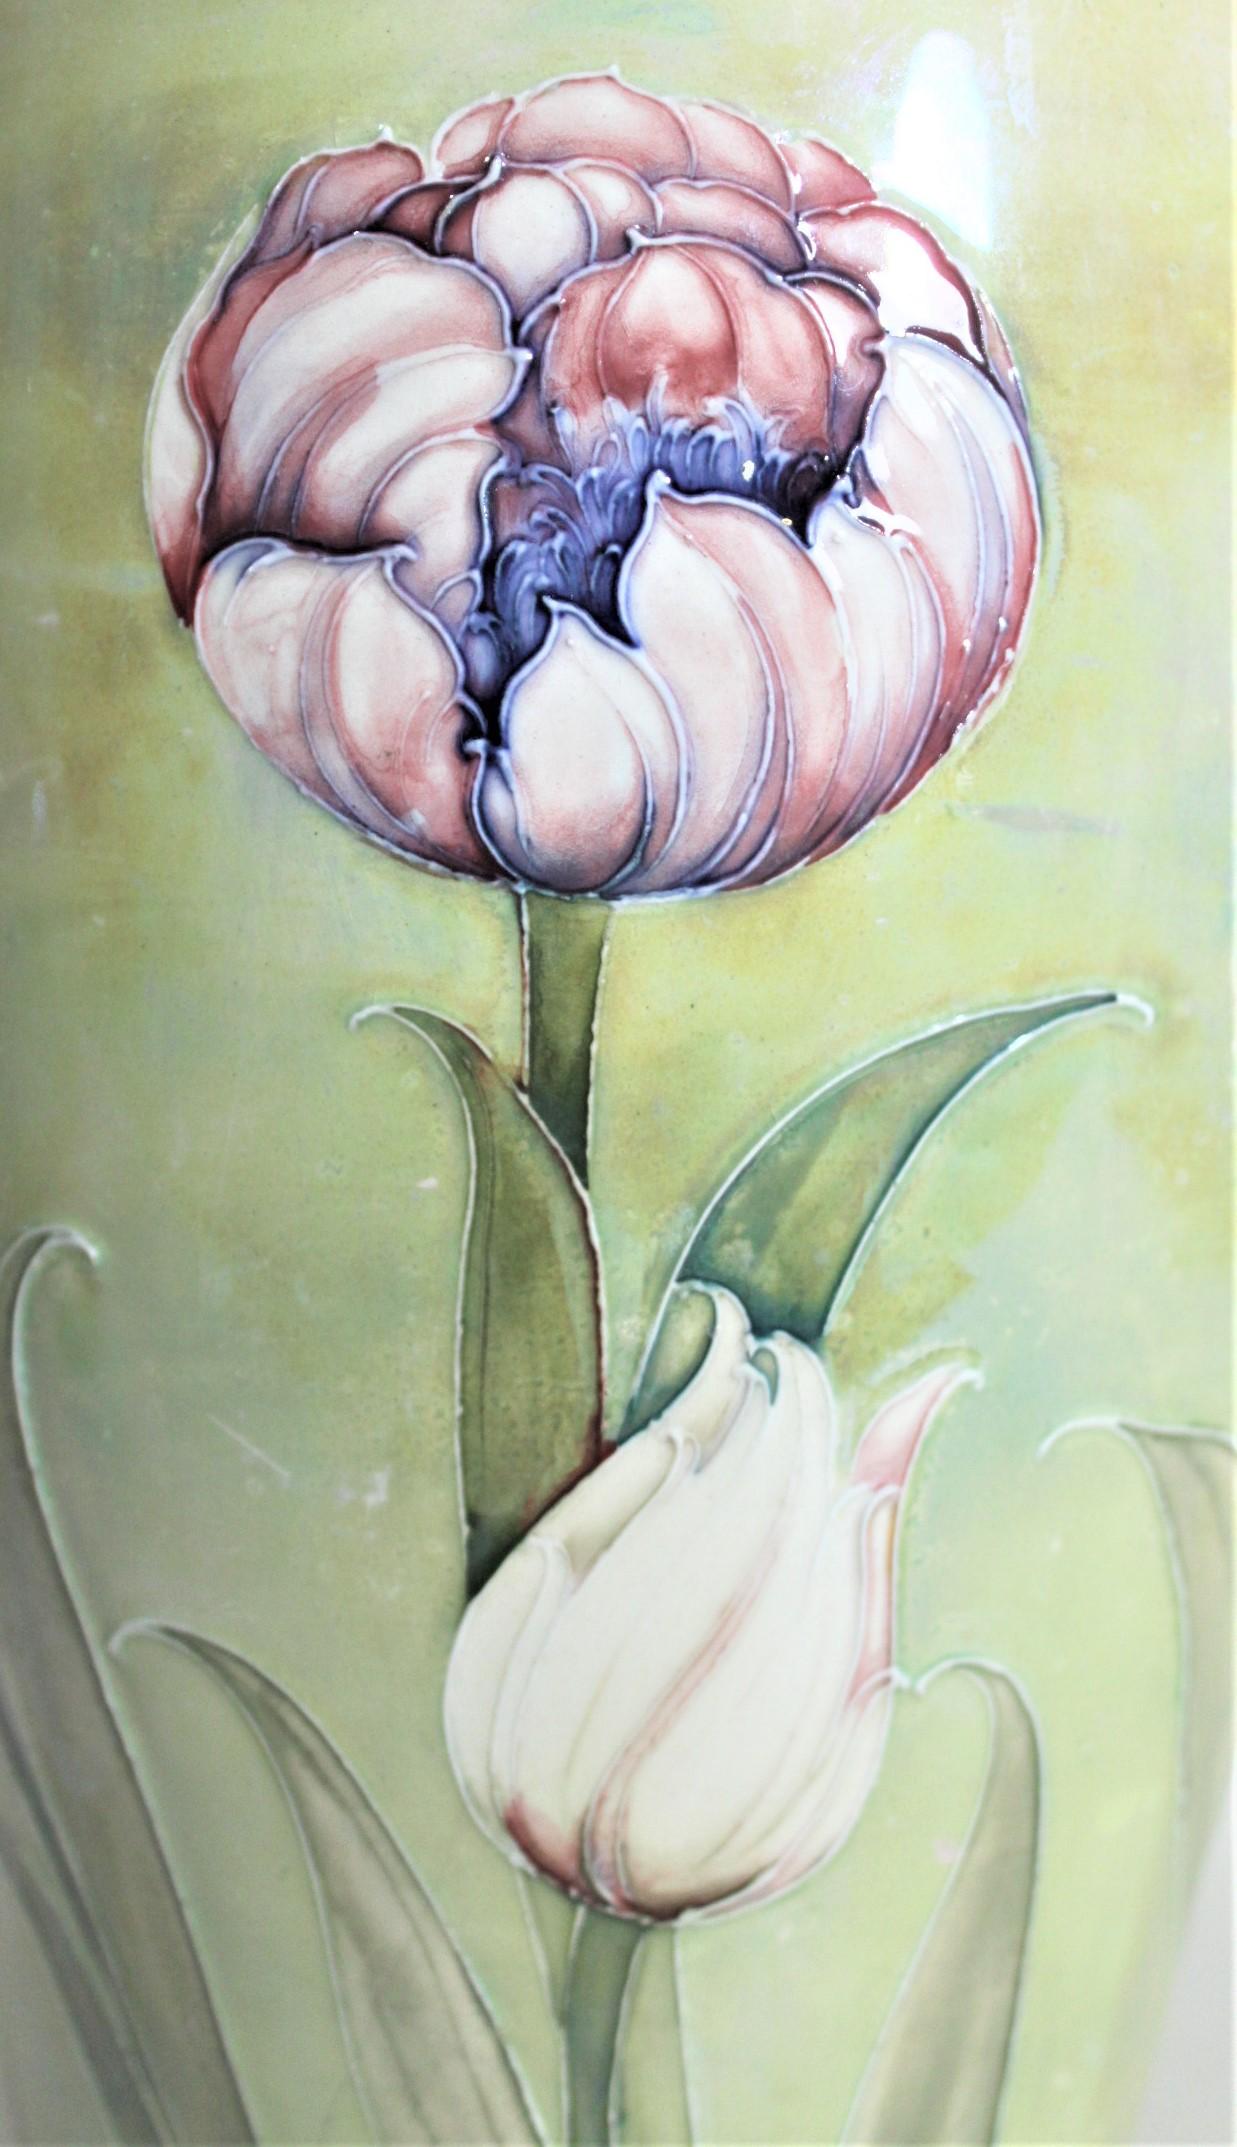 Antique William Moorcroft Art Pottery Tulip Patterned Vase with Lustre Glaze For Sale 1